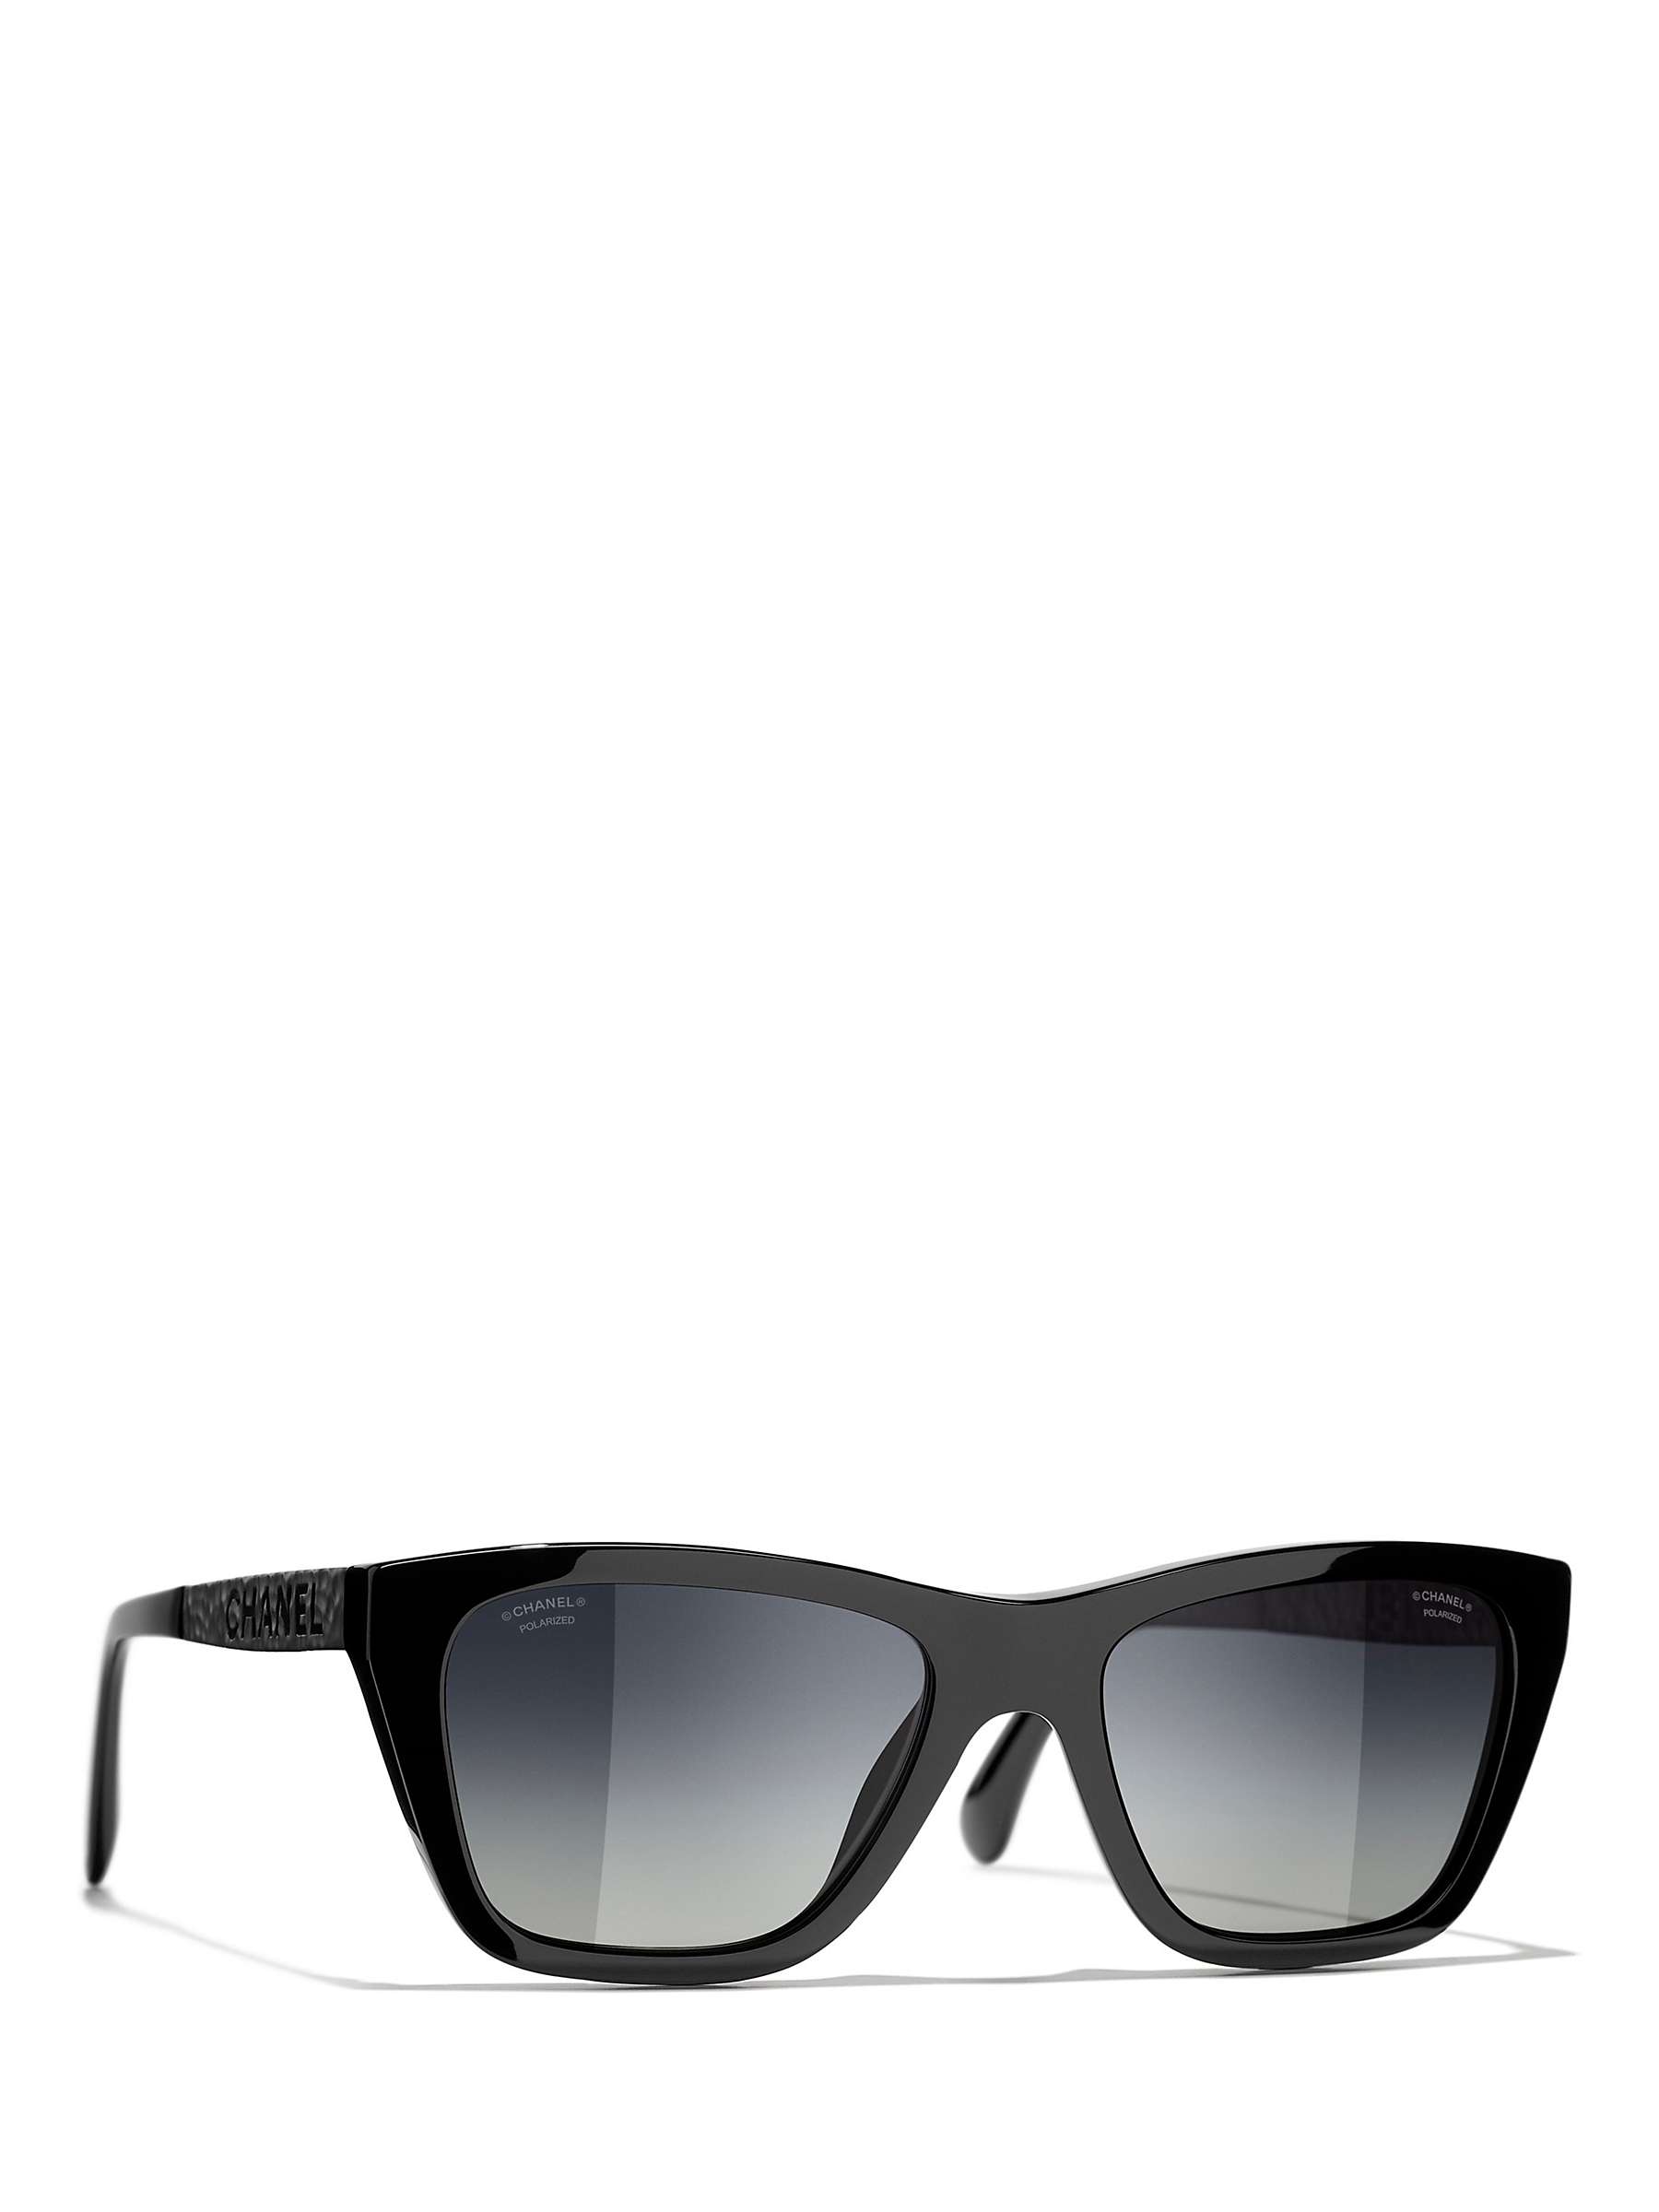 Buy CHANEL Rectangular Sunglasses CH5442 Black/Grey Gradient Online at johnlewis.com